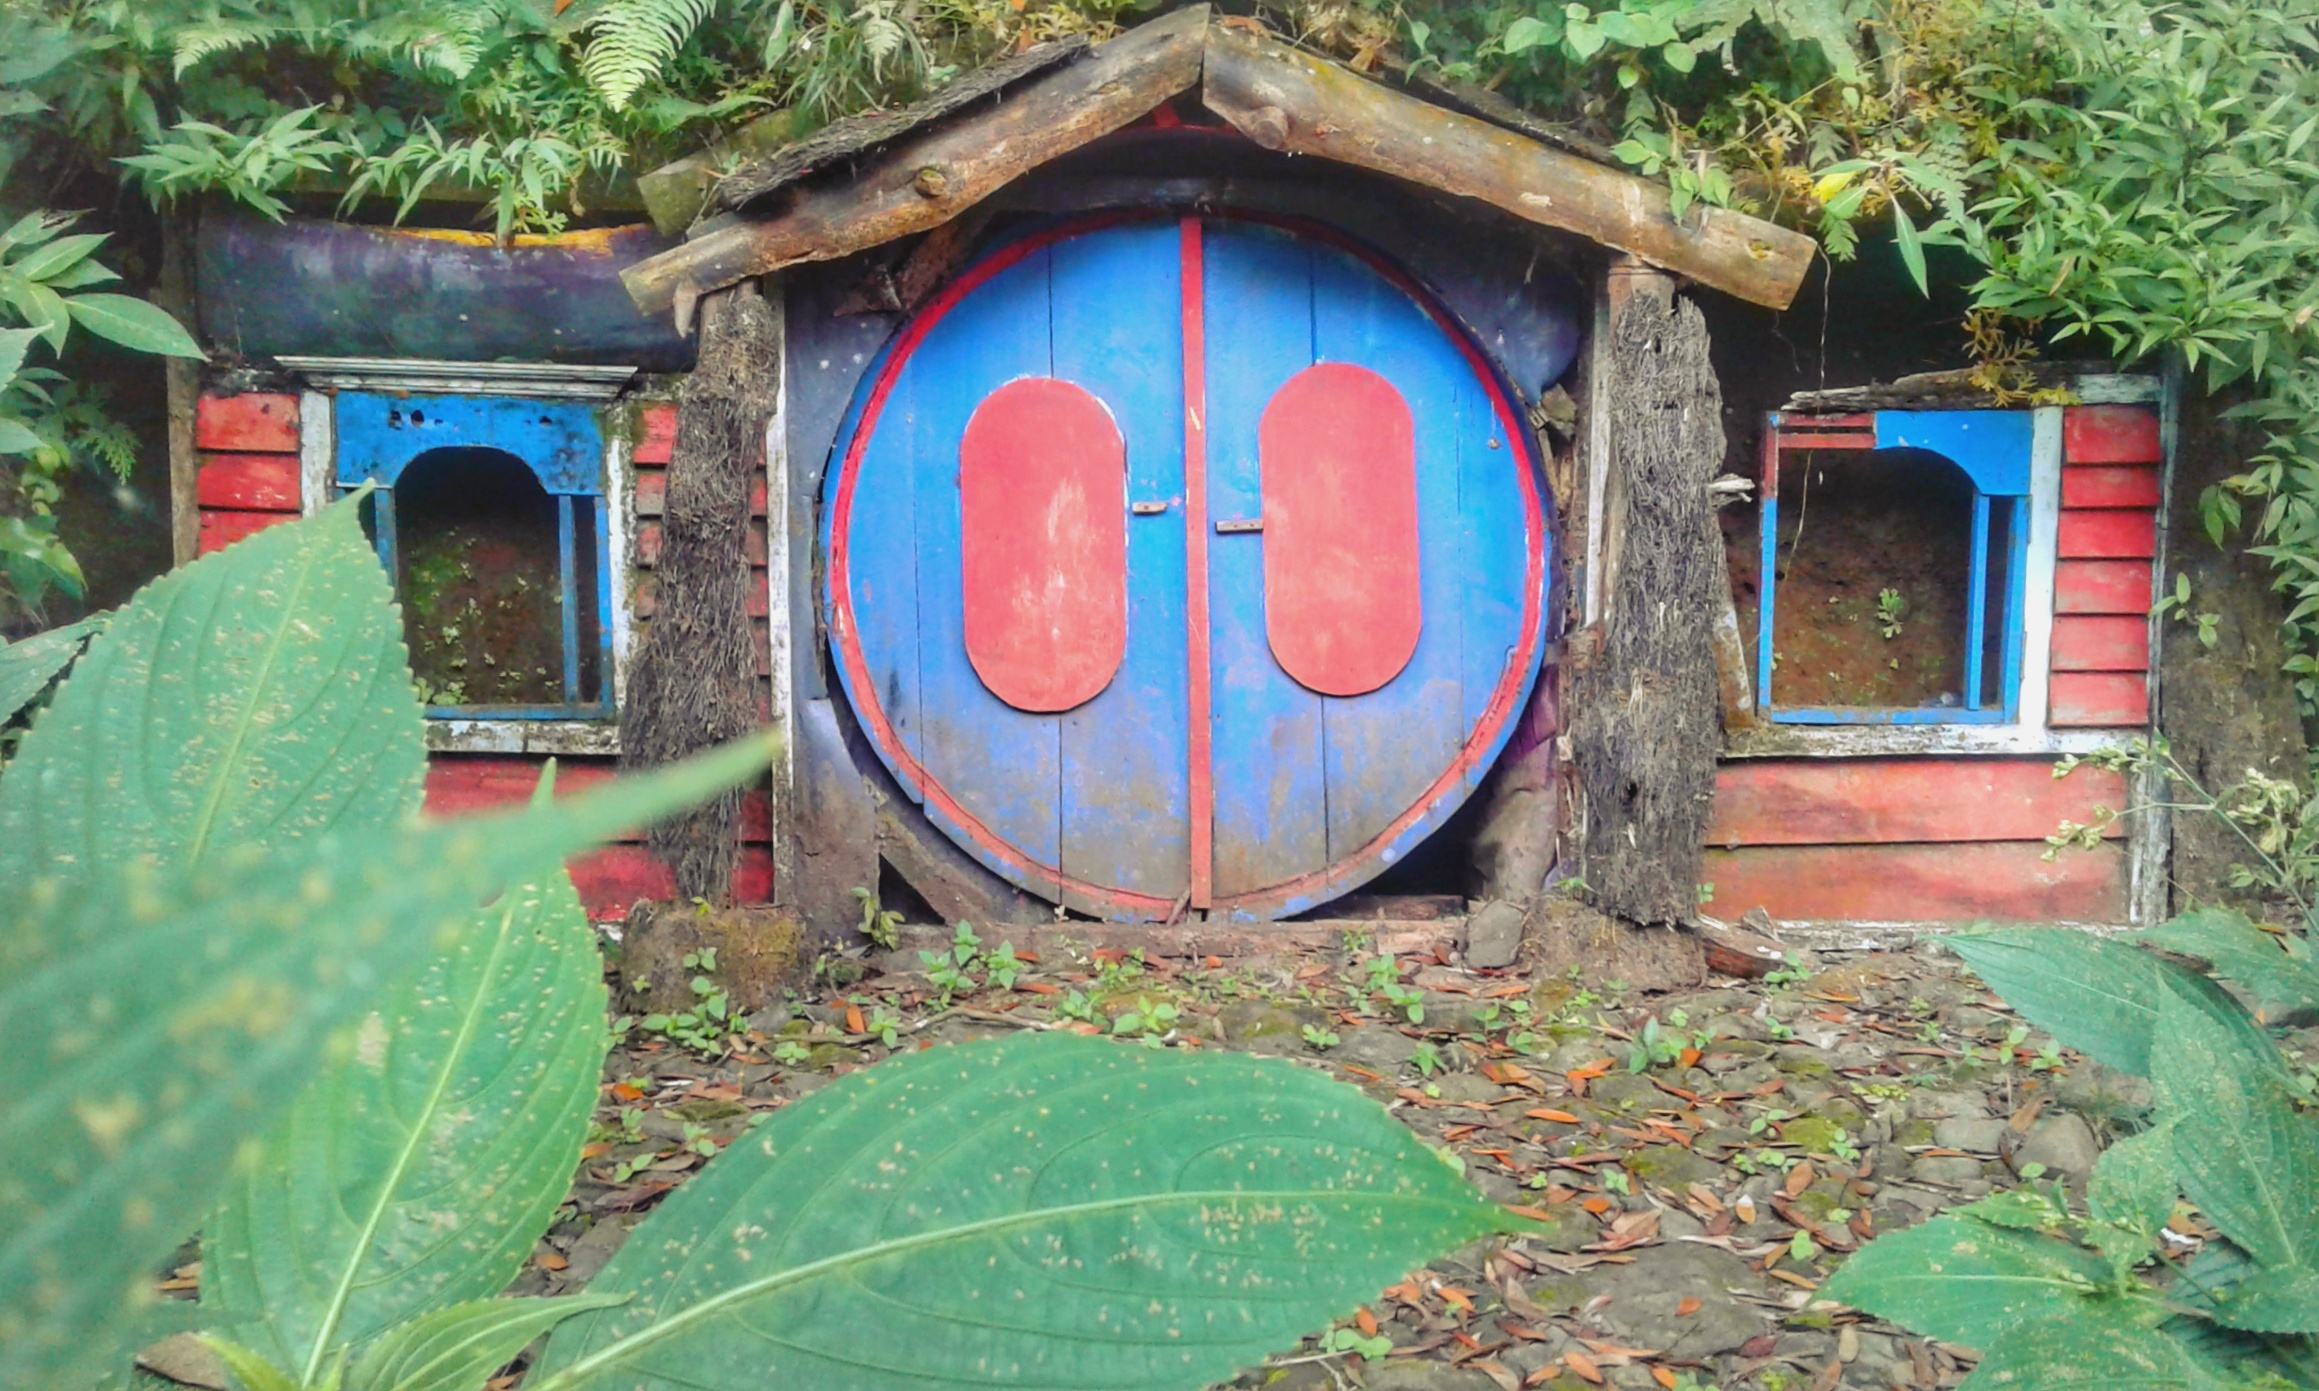 Rumah Hobbit Biru Merah (c) Eva Oktavikasari/Travelingyuk